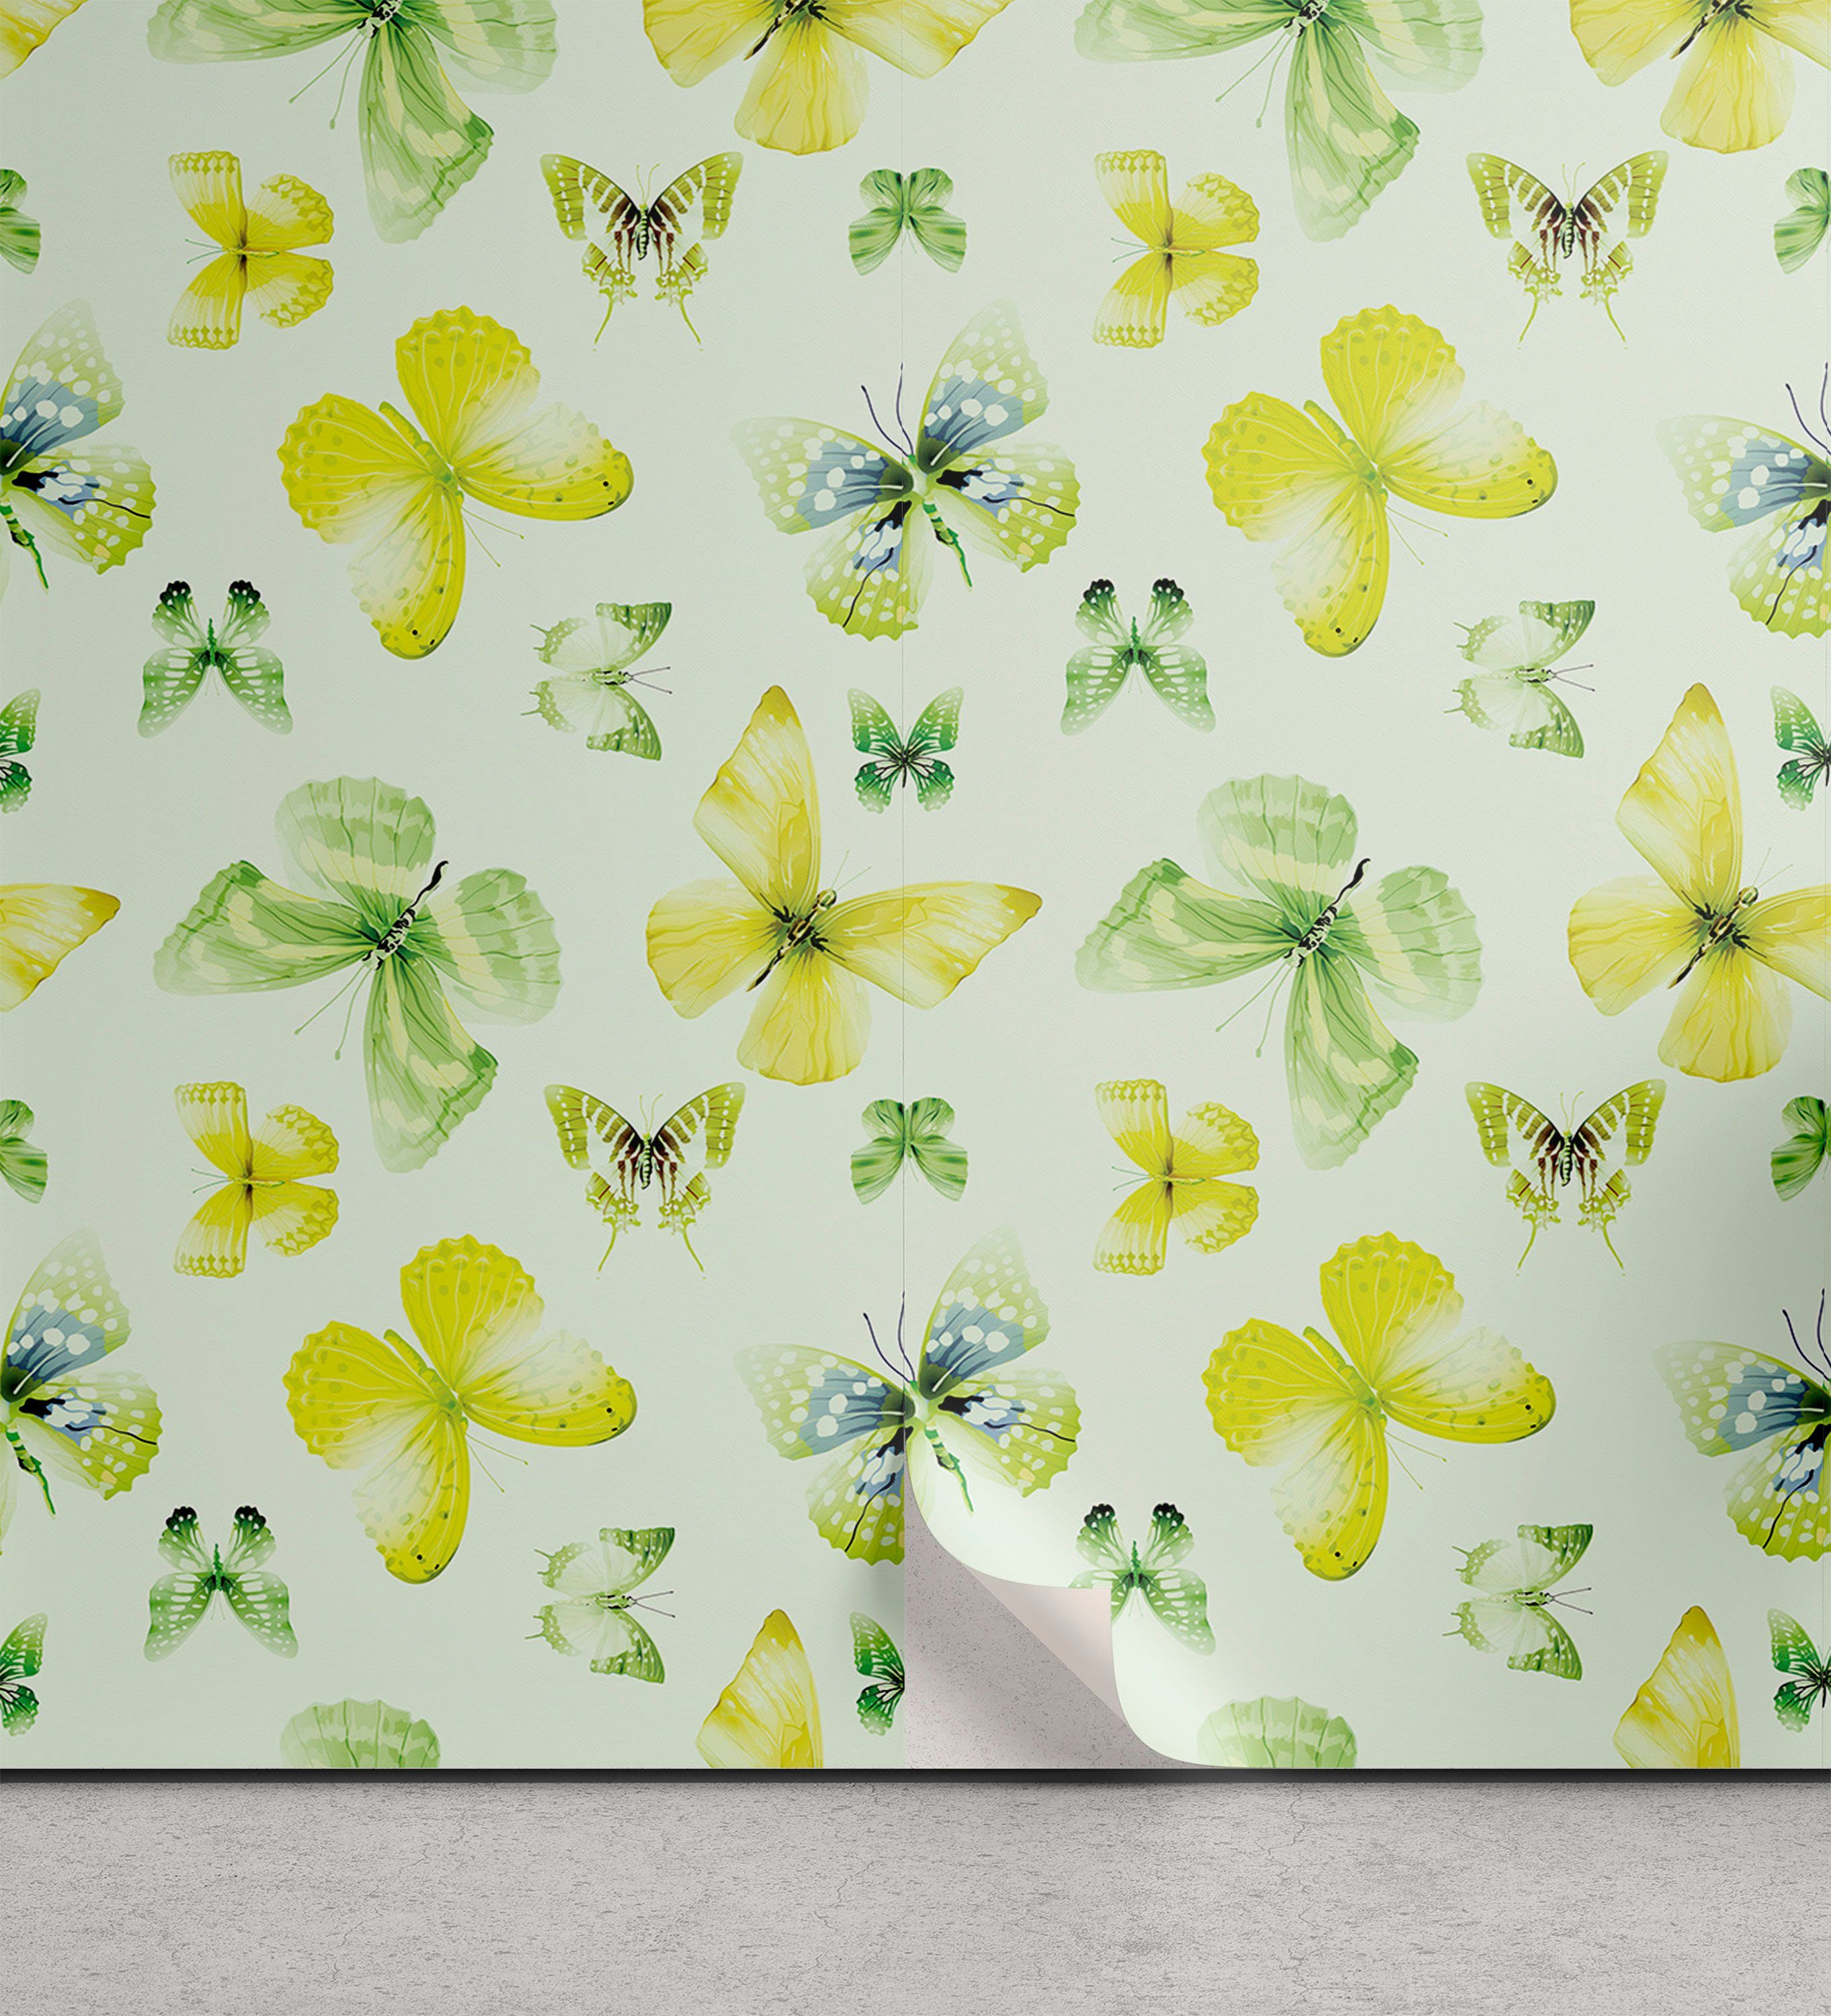 Abakuhaus Vinyltapete selbstklebendes Wohnzimmer Küchenakzent, Natur-Kunst Outdoor-Natur Insekten